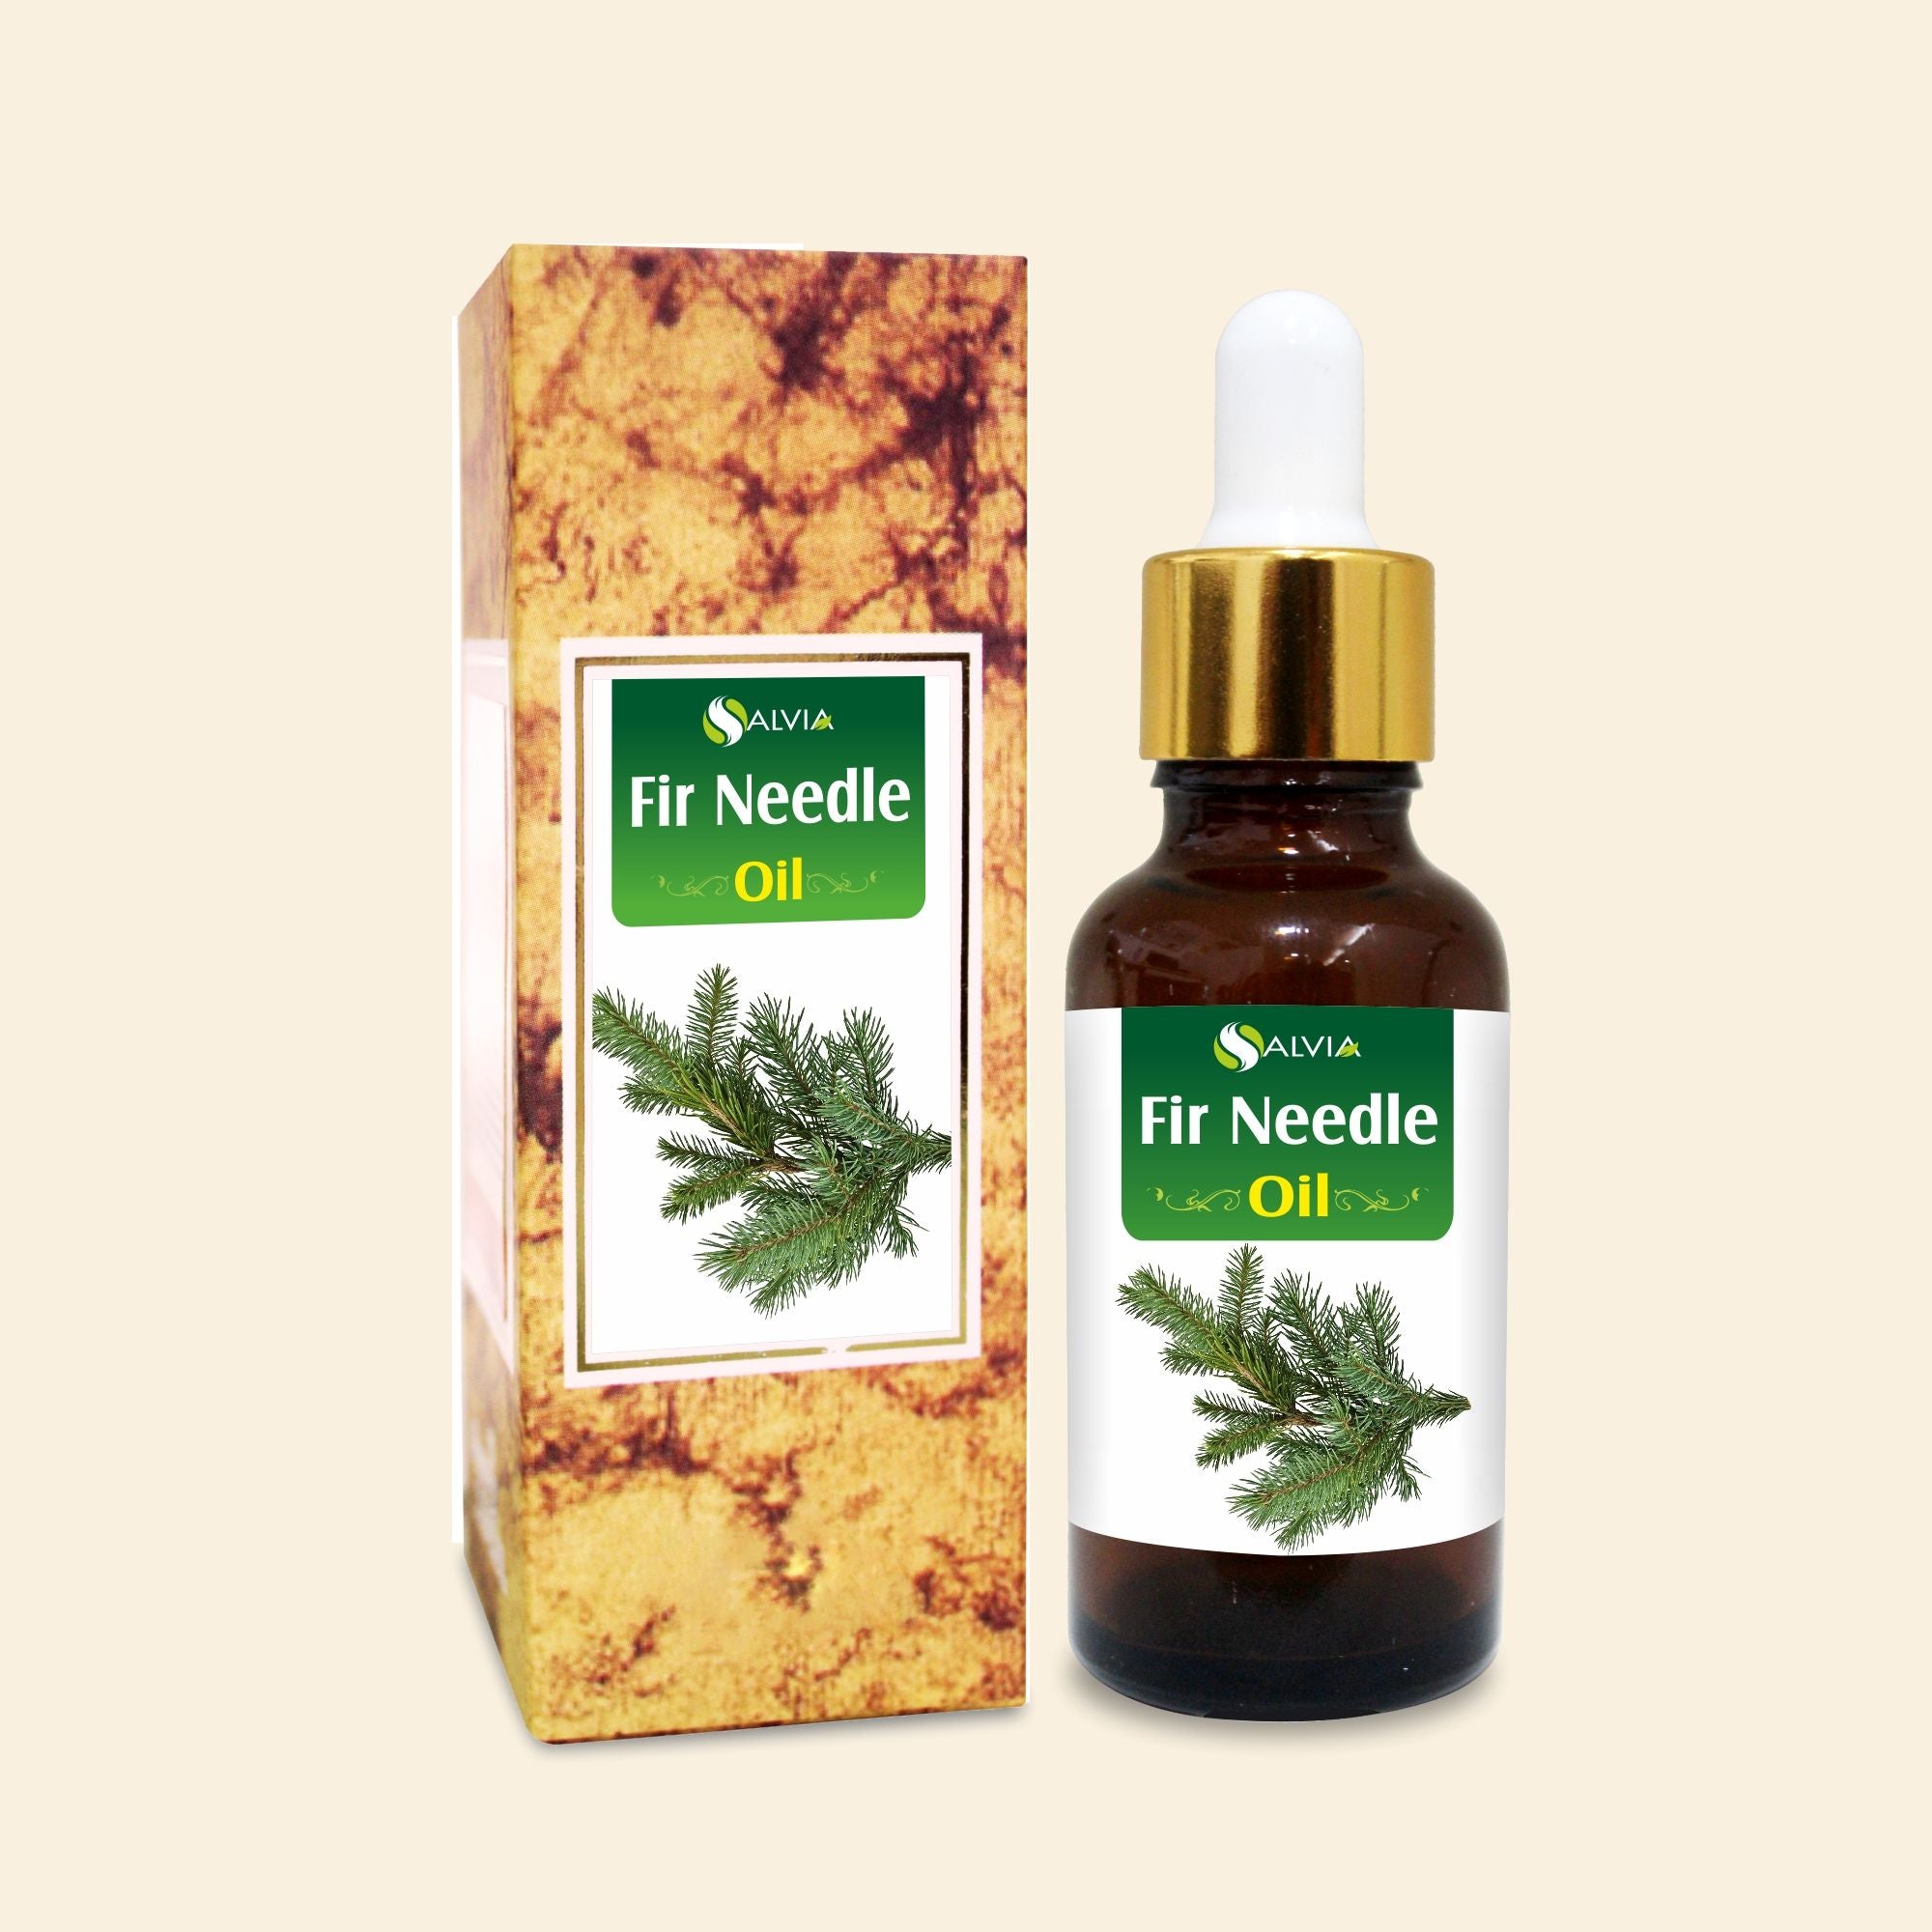 Salvia Natural Essential Oils Fir Needle Oil (Abies) 100% Natural Pure Essential Oil